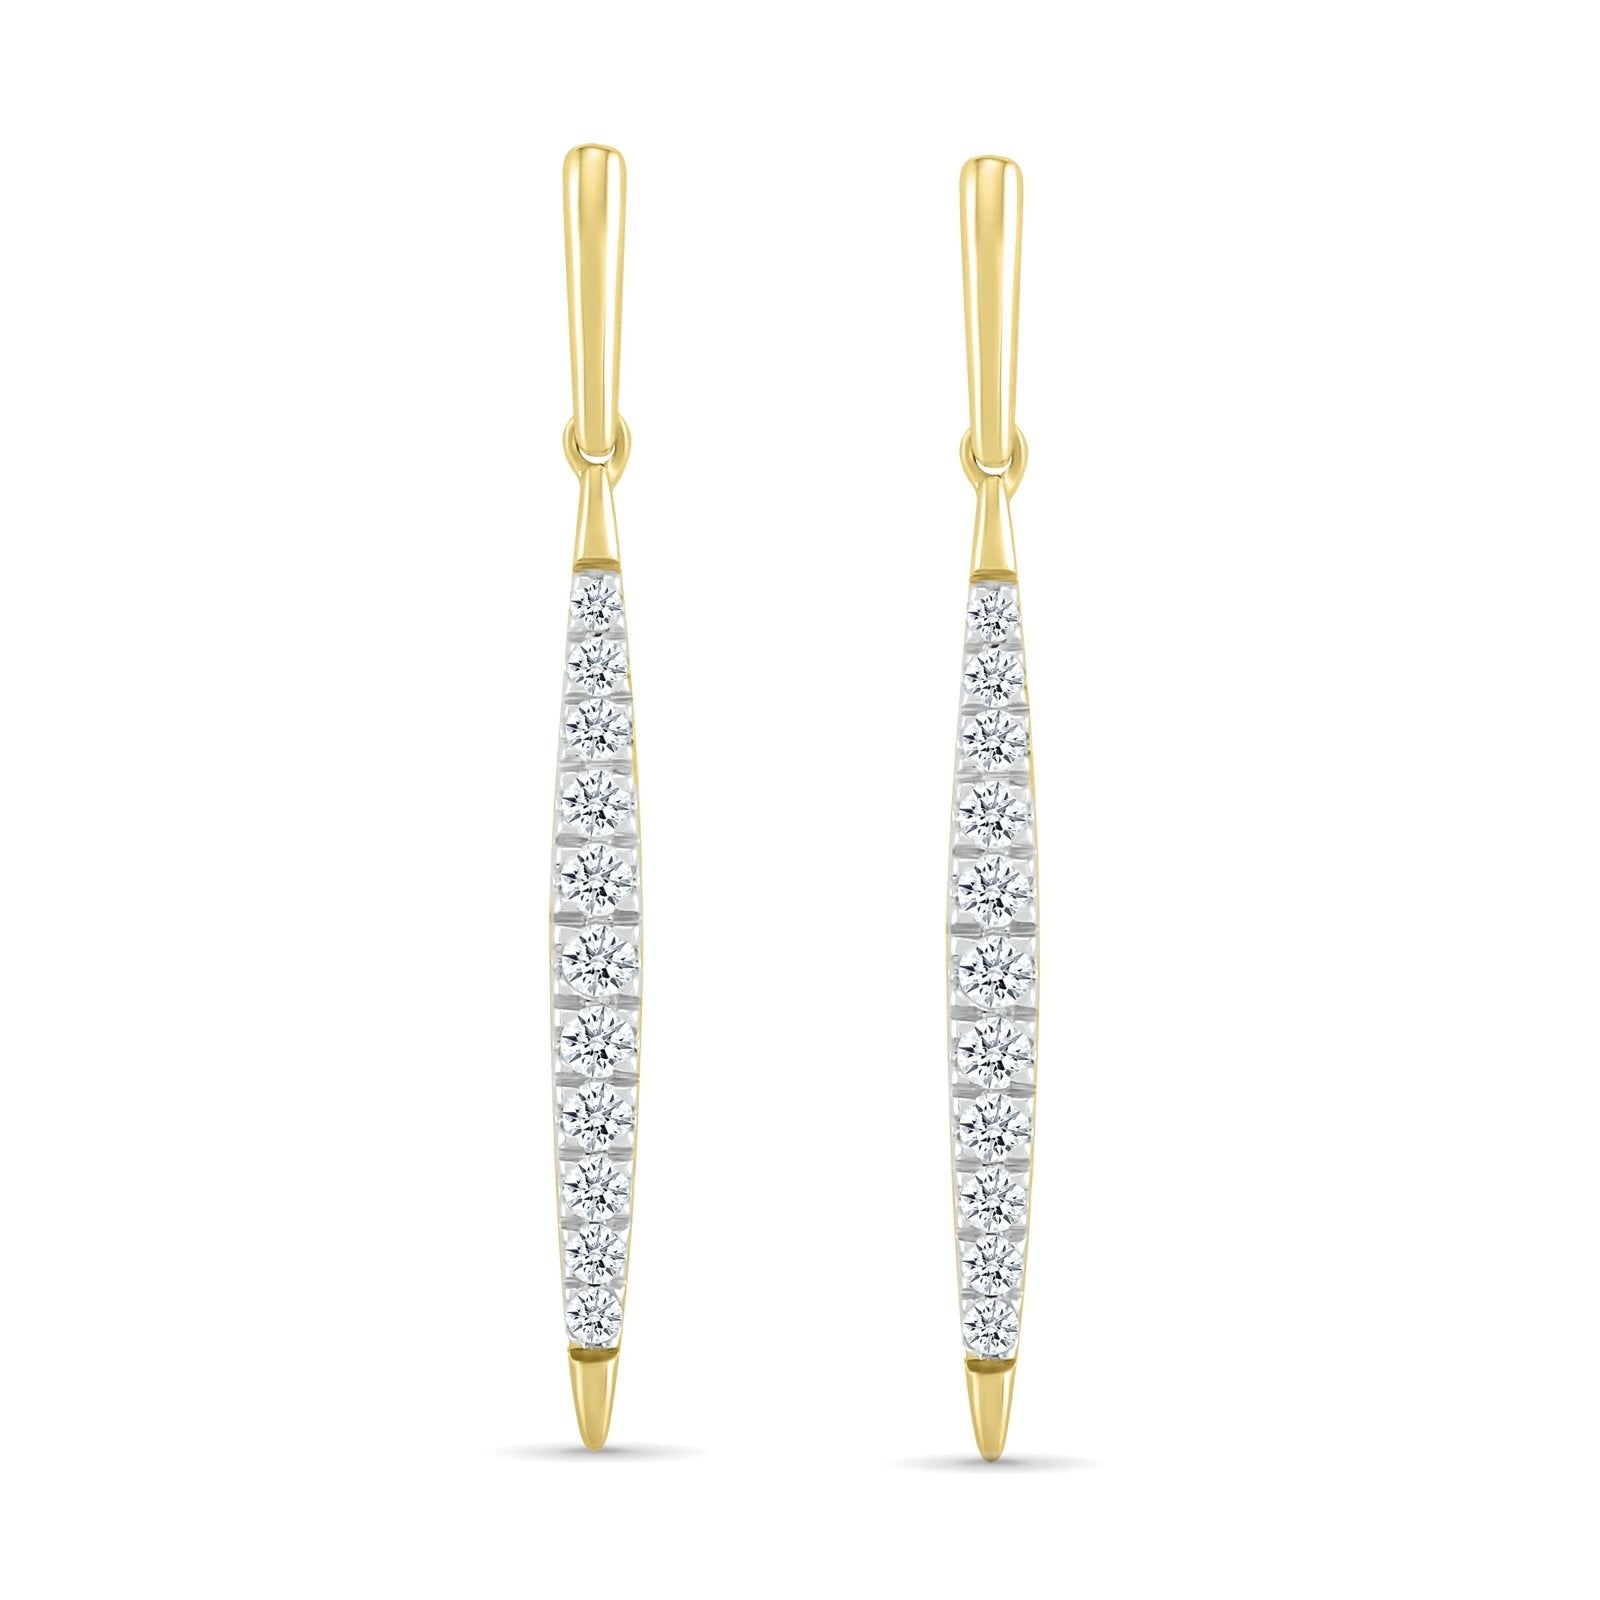 Diamond Dangle Stud Earrings Earrings Estella Collection #product_description# 32663 Dangle Earrings Diamond Made to Order #tag4# #tag5# #tag6# #tag7# #tag8# #tag9# #tag10#